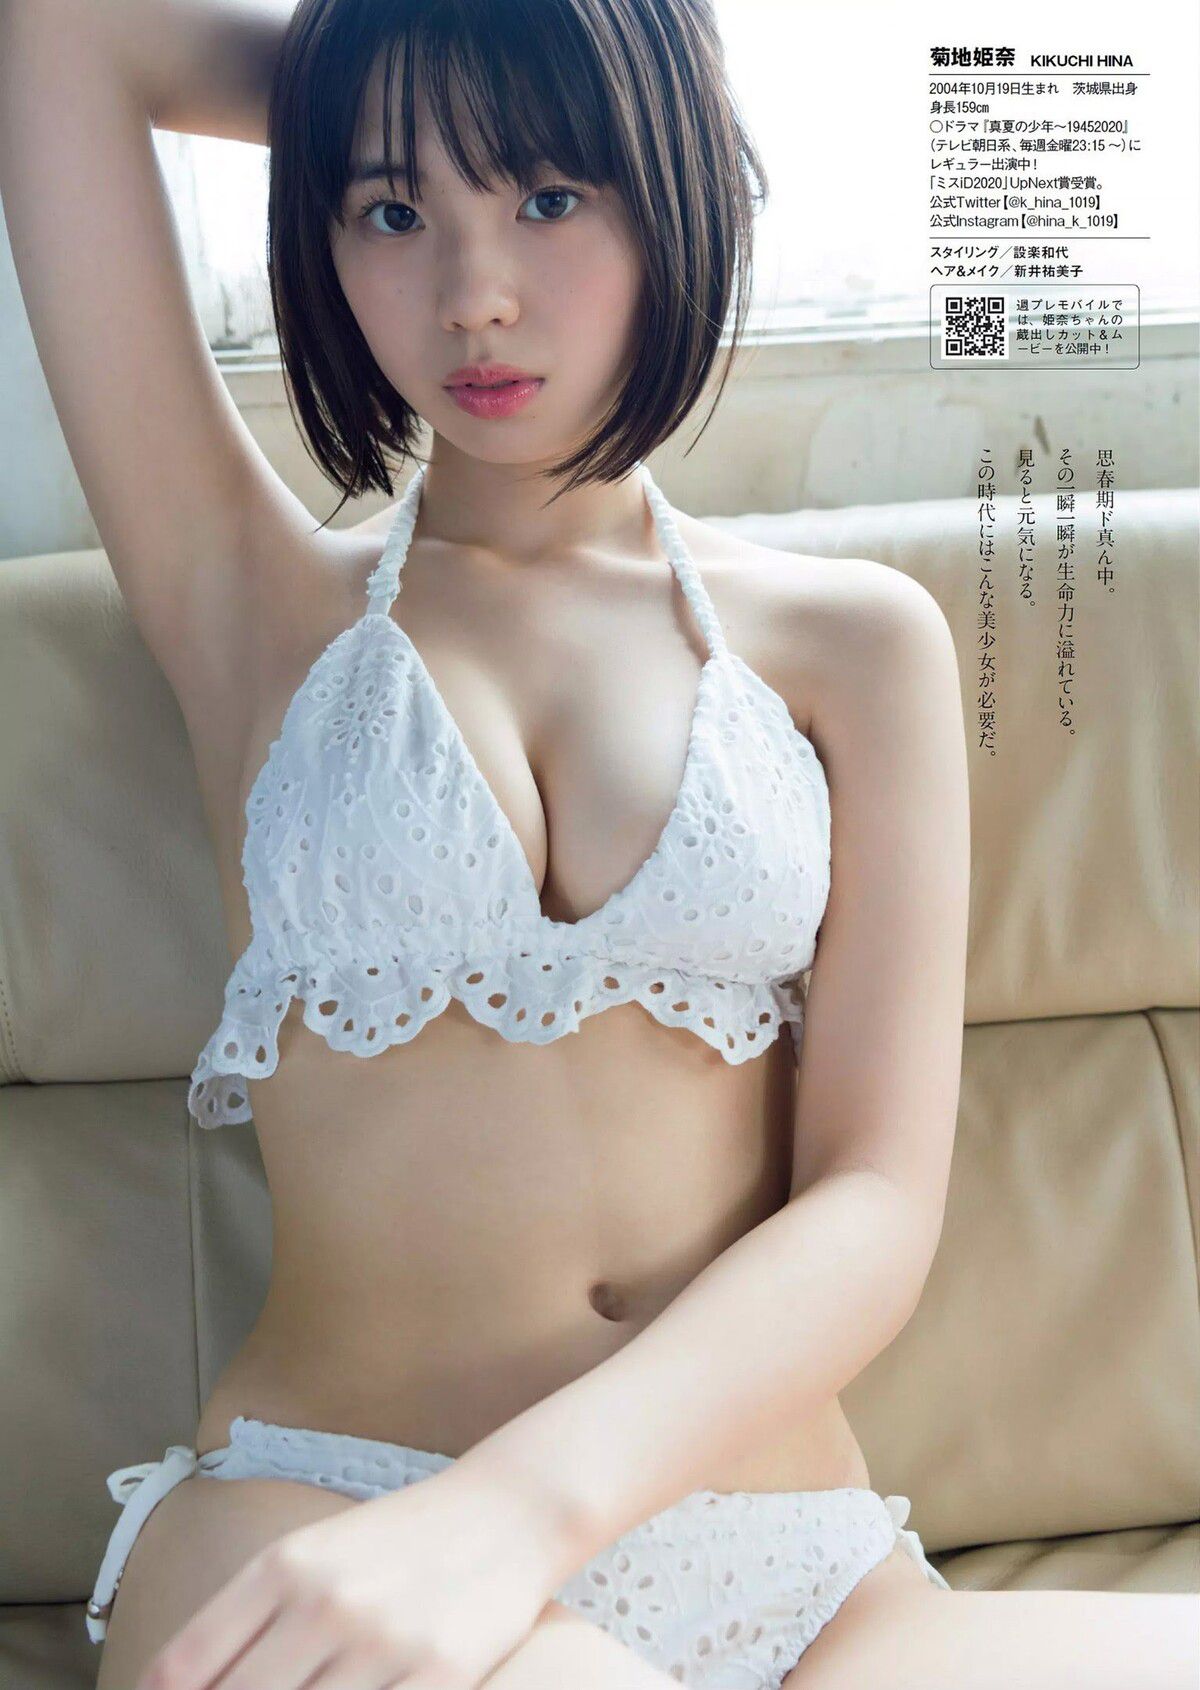 [Image] recent JK Gradle's body is too erotic eroech www (Kikuchi Himena) 7